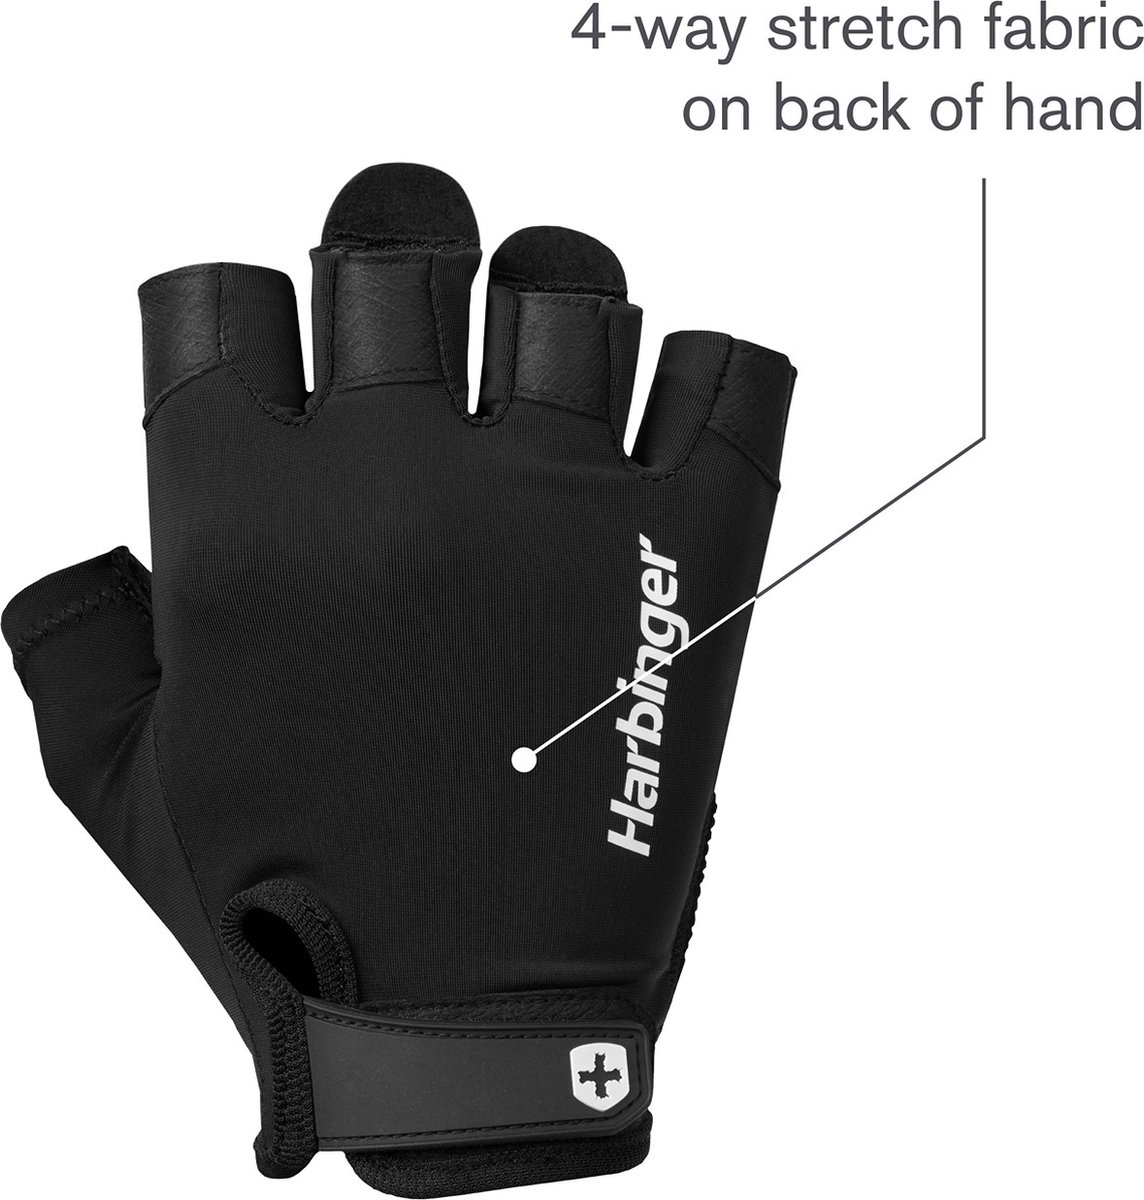 Harbinger Pro Gloves - Fitness Handschoenen Heren & Dames - Licht & Flexibel - XL - Unisex - Zwart - Gym & Crossfit Training - Krachttraining